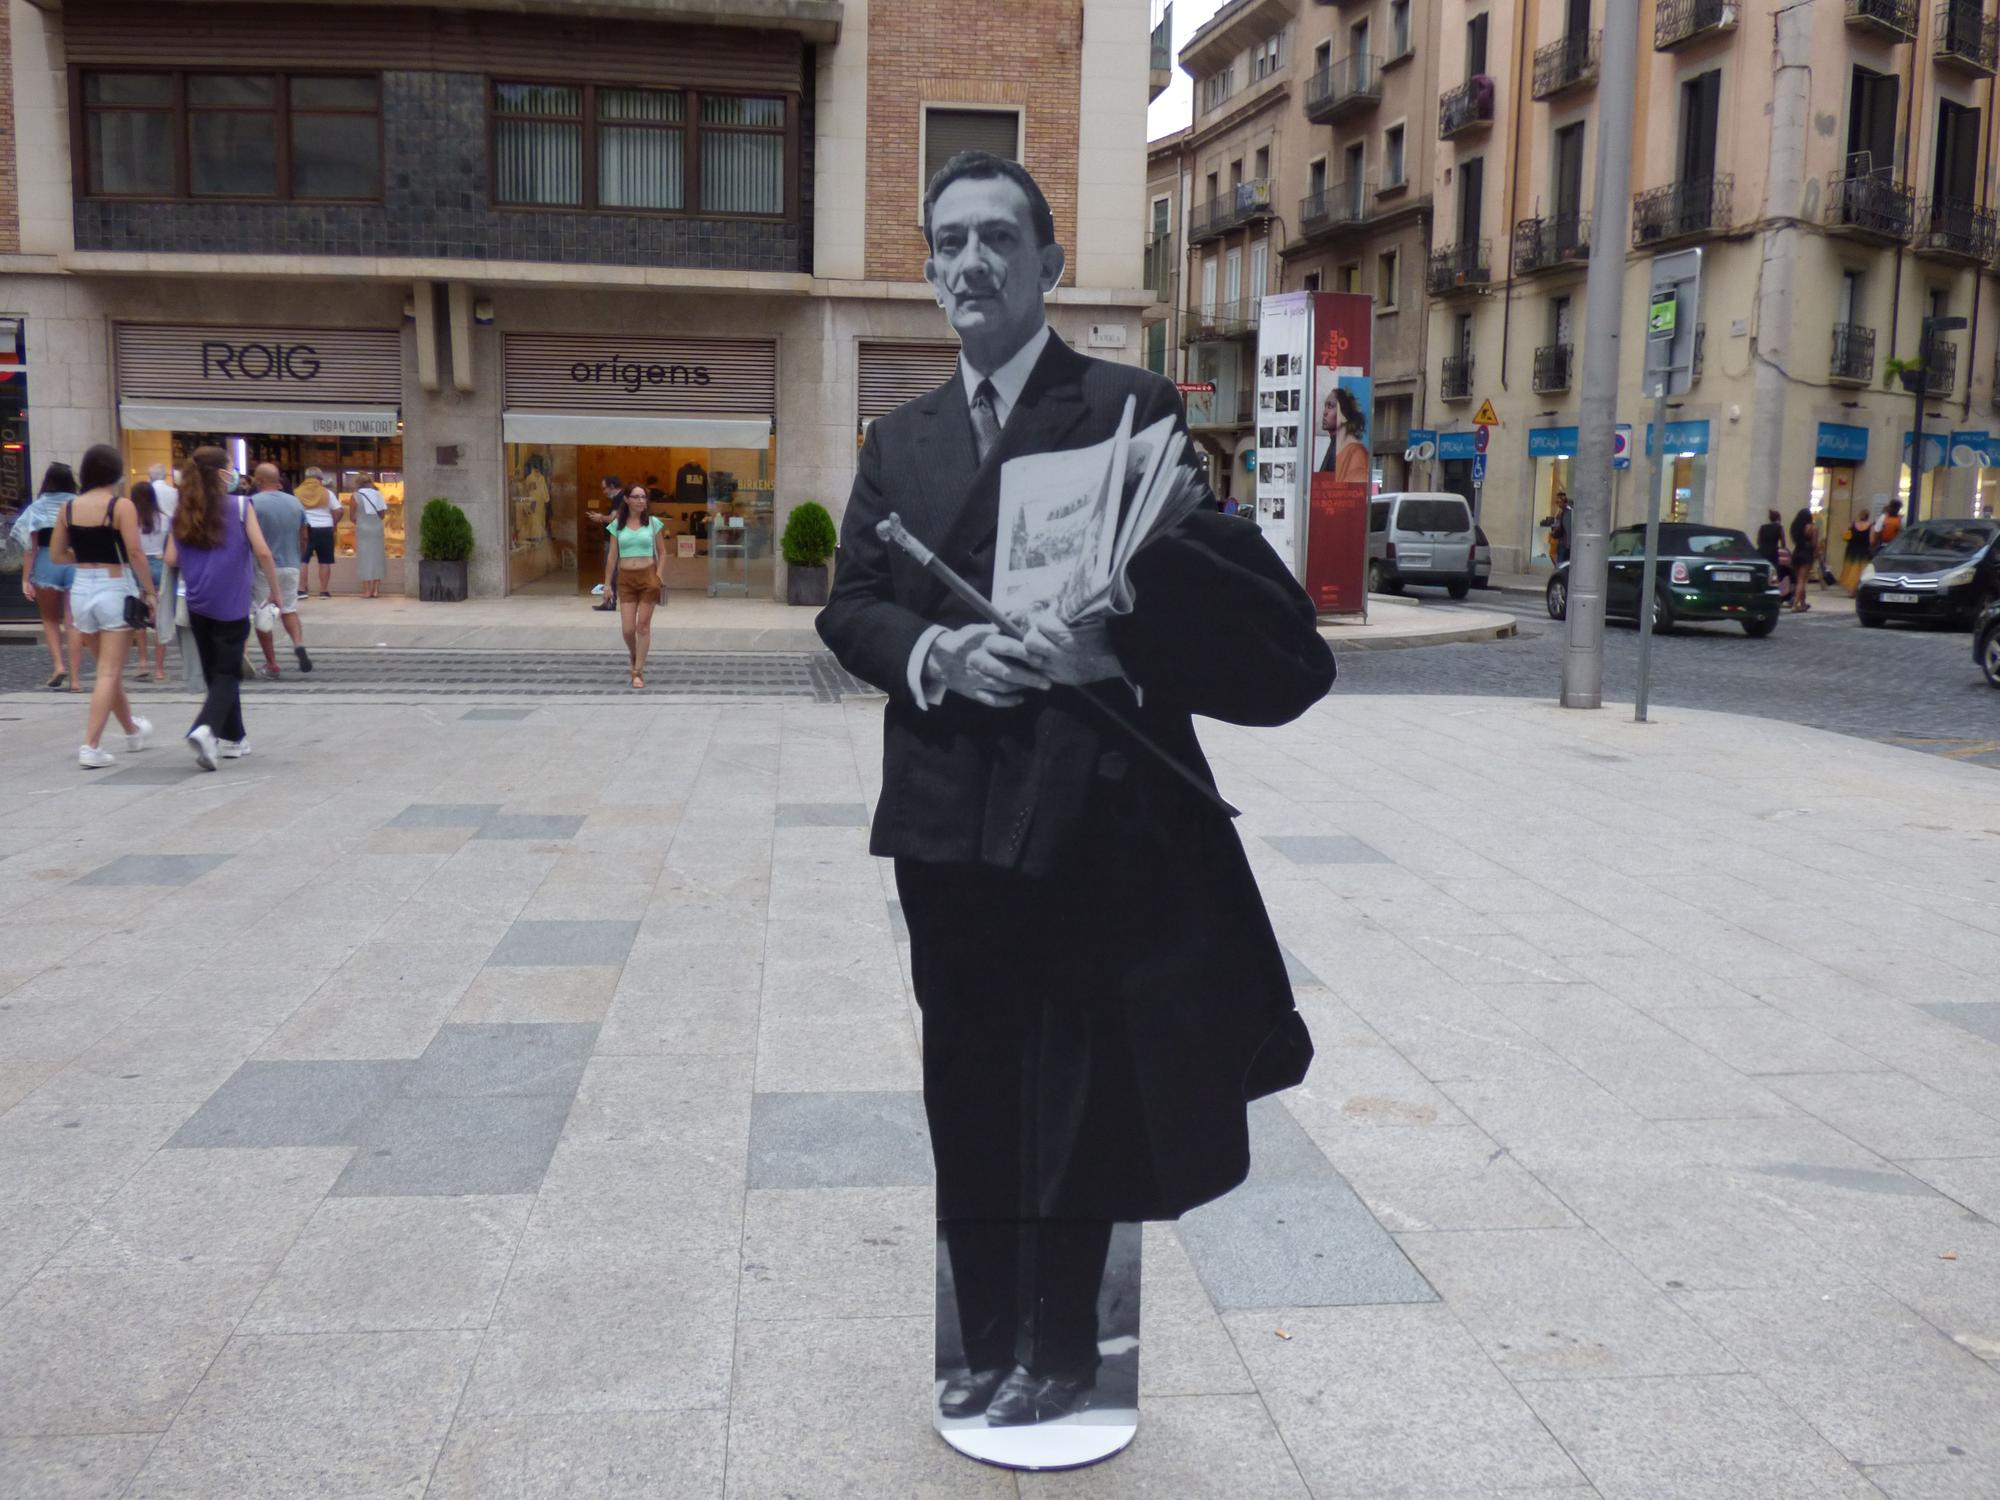 Últims dies per gaudir del Dalí de Figueres